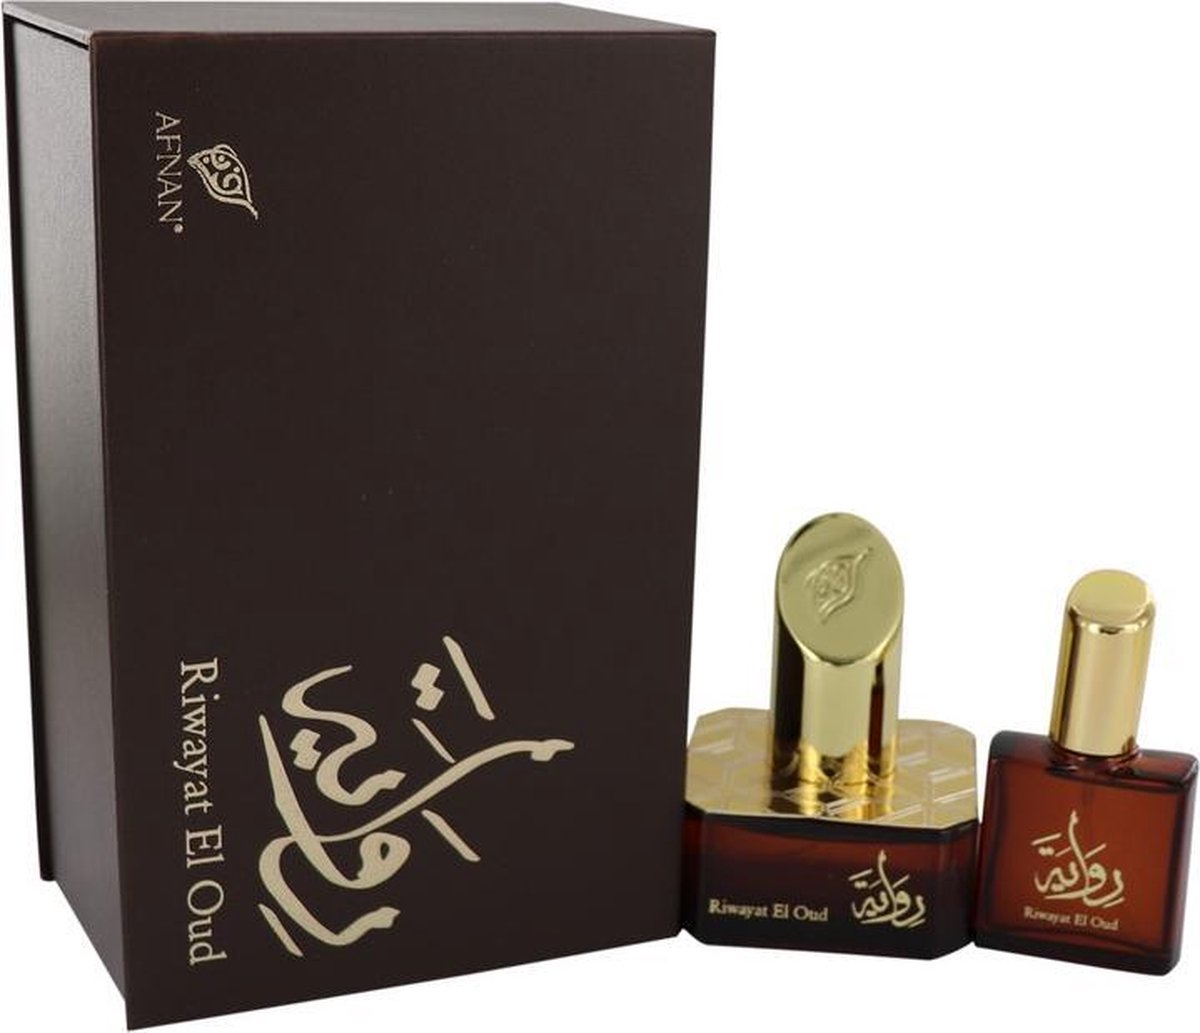 Riwayat El Oud by Afnan 50 ml - Eau De Parfum Spray + Free 20 ml Travel EDP Spray